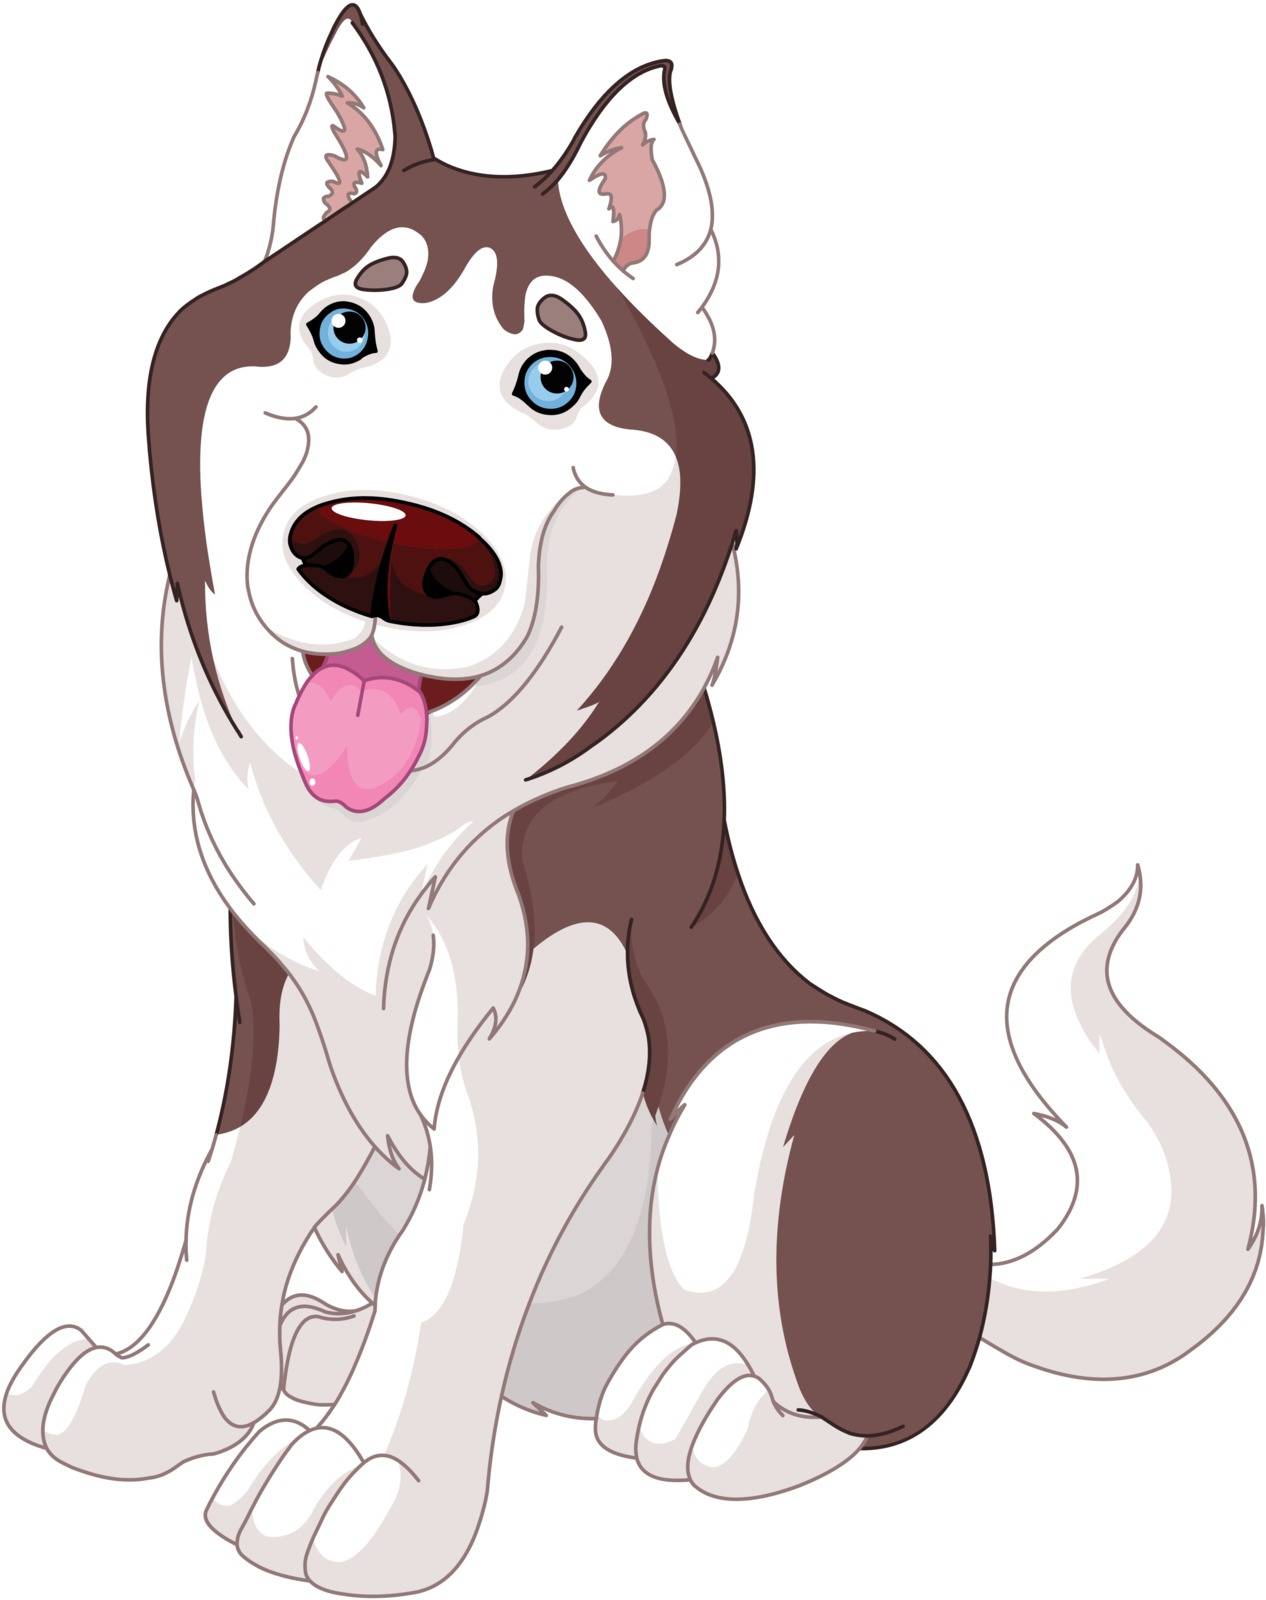 Cartoon illustration of Cute husky dog